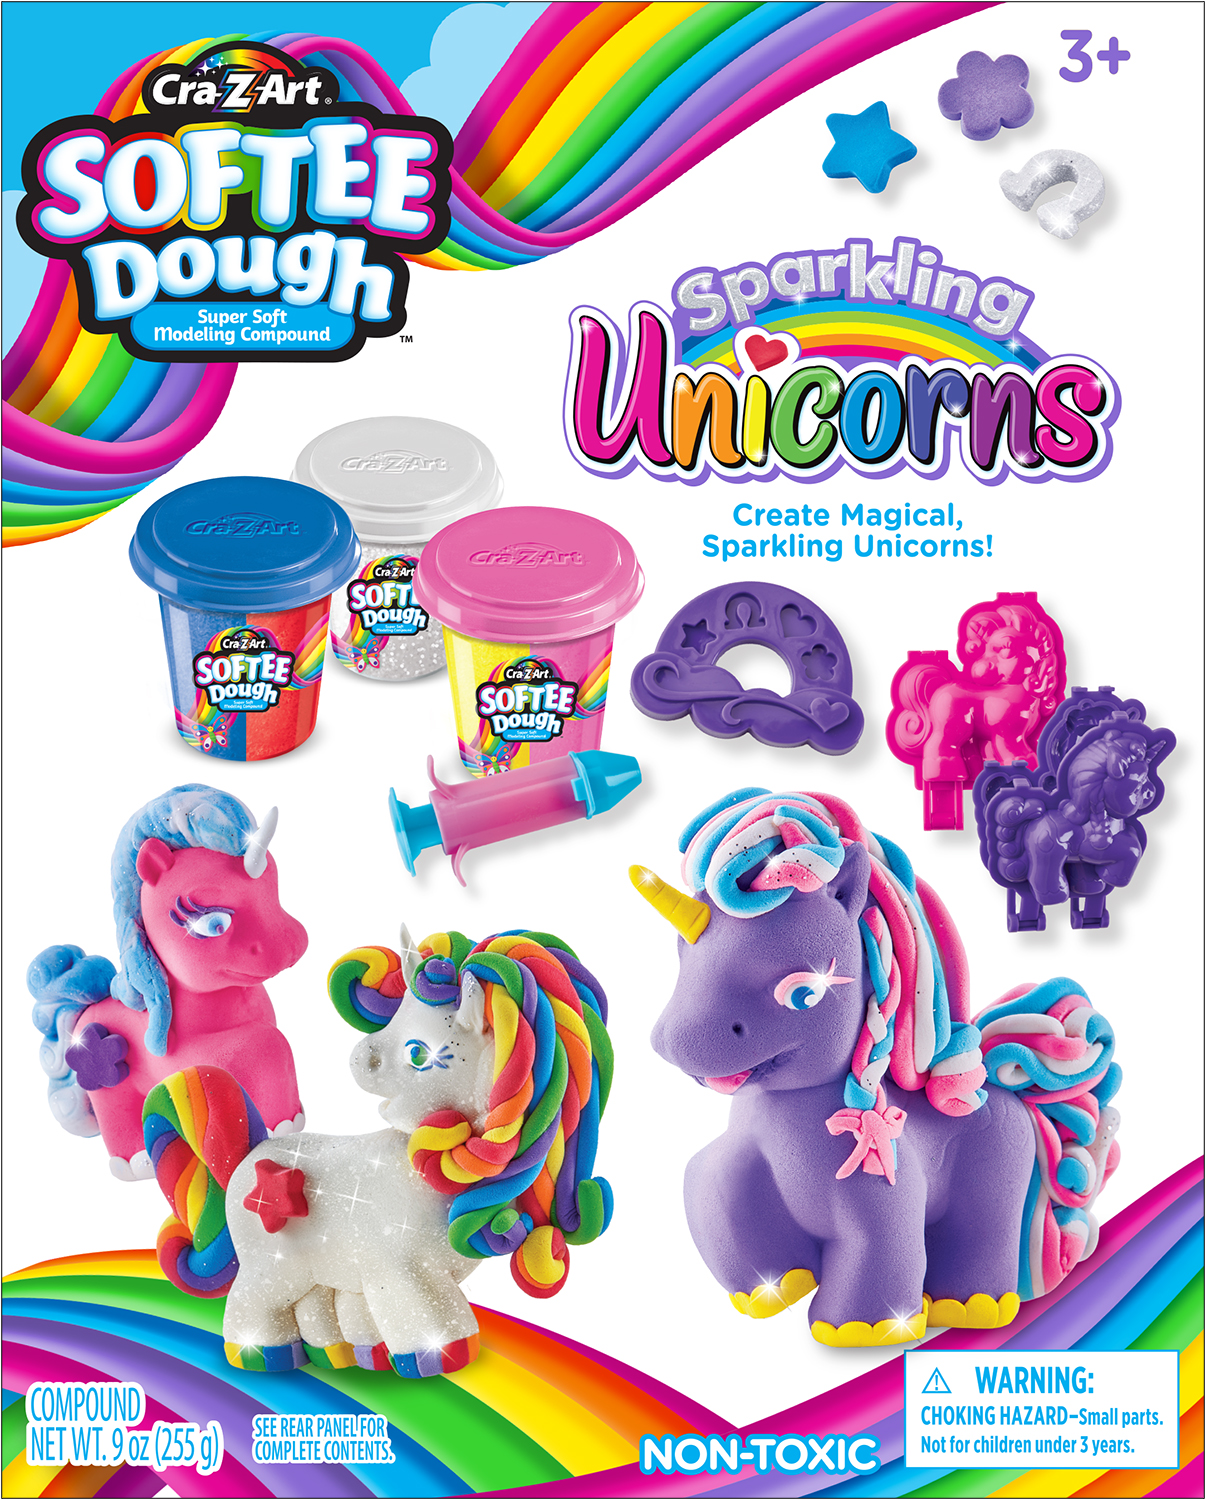 Cra-Z-Art Softee Dough Sparkling Unicorns Modeling Compound Play Set - image 1 of 9